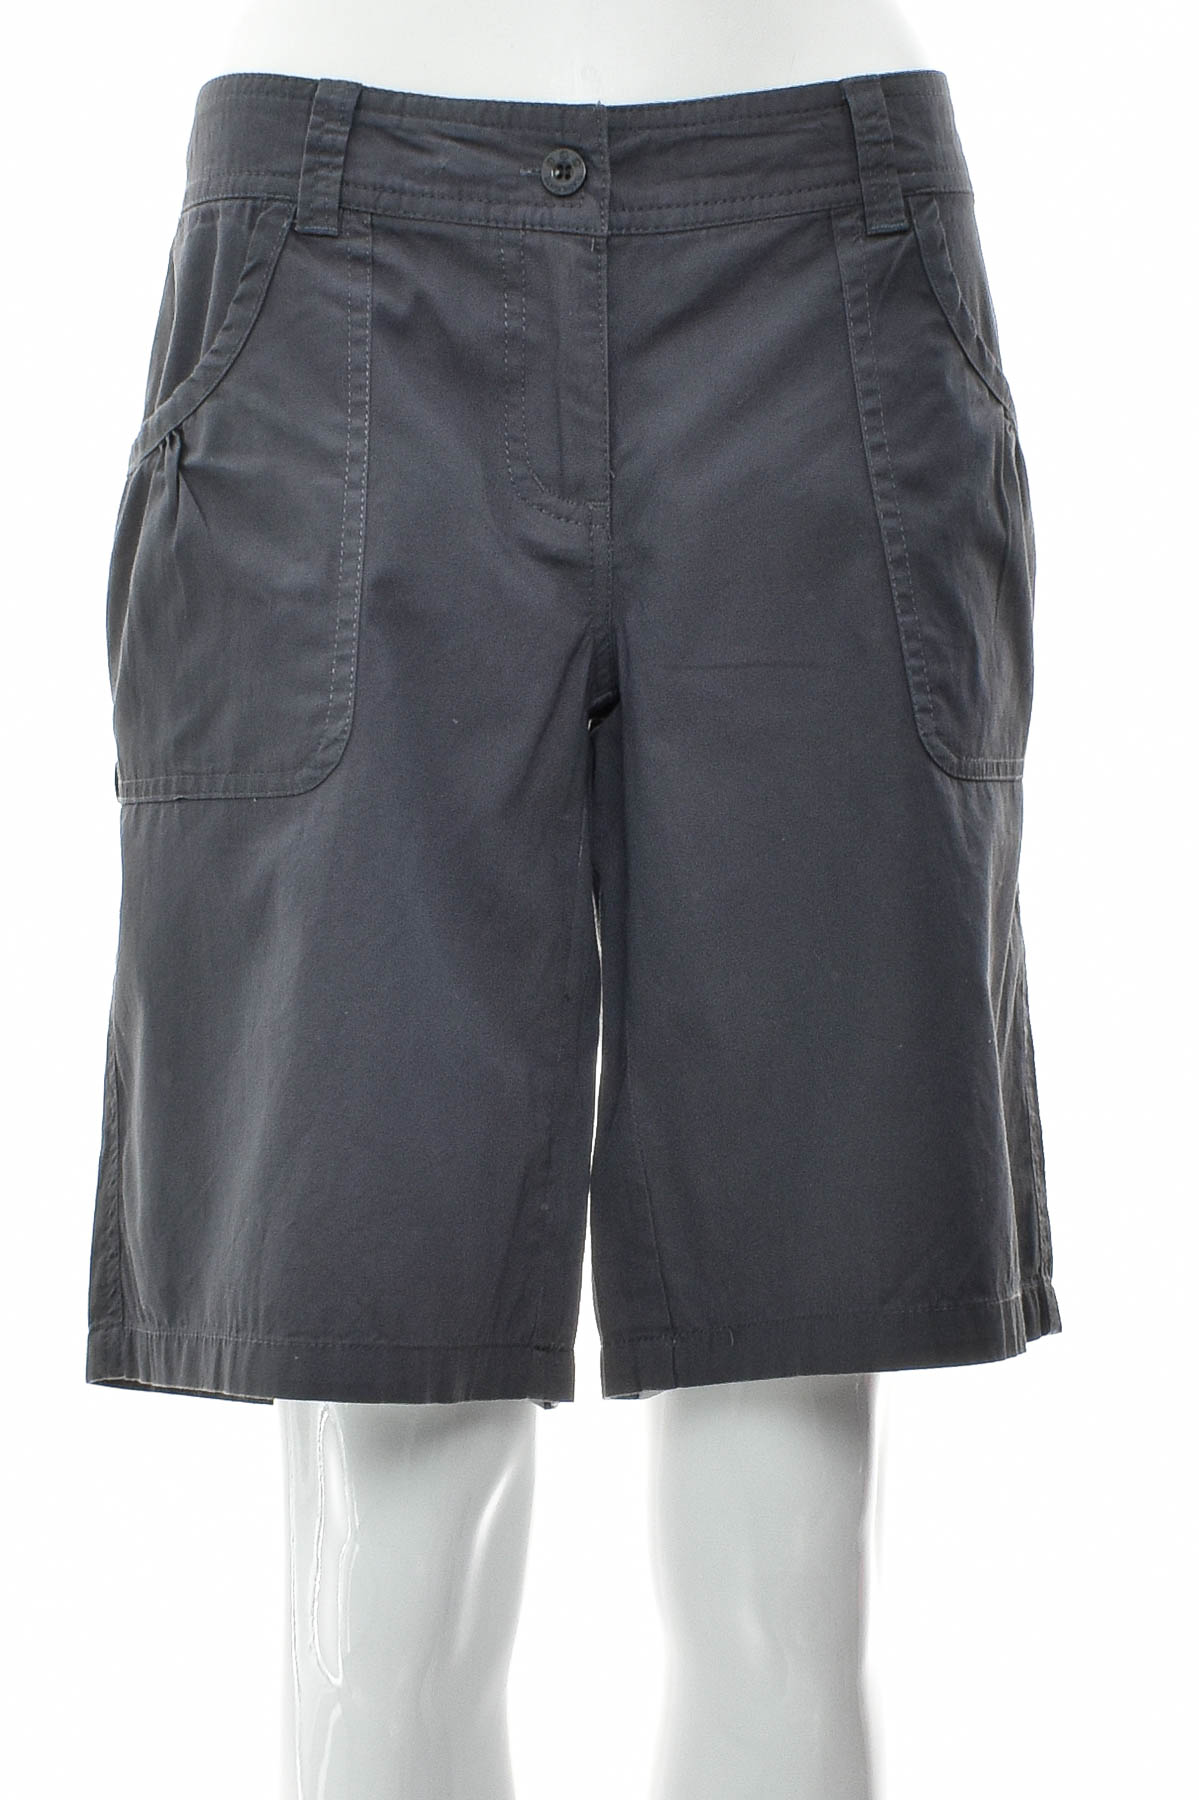 Female shorts - FLASHLIGHTS - 0